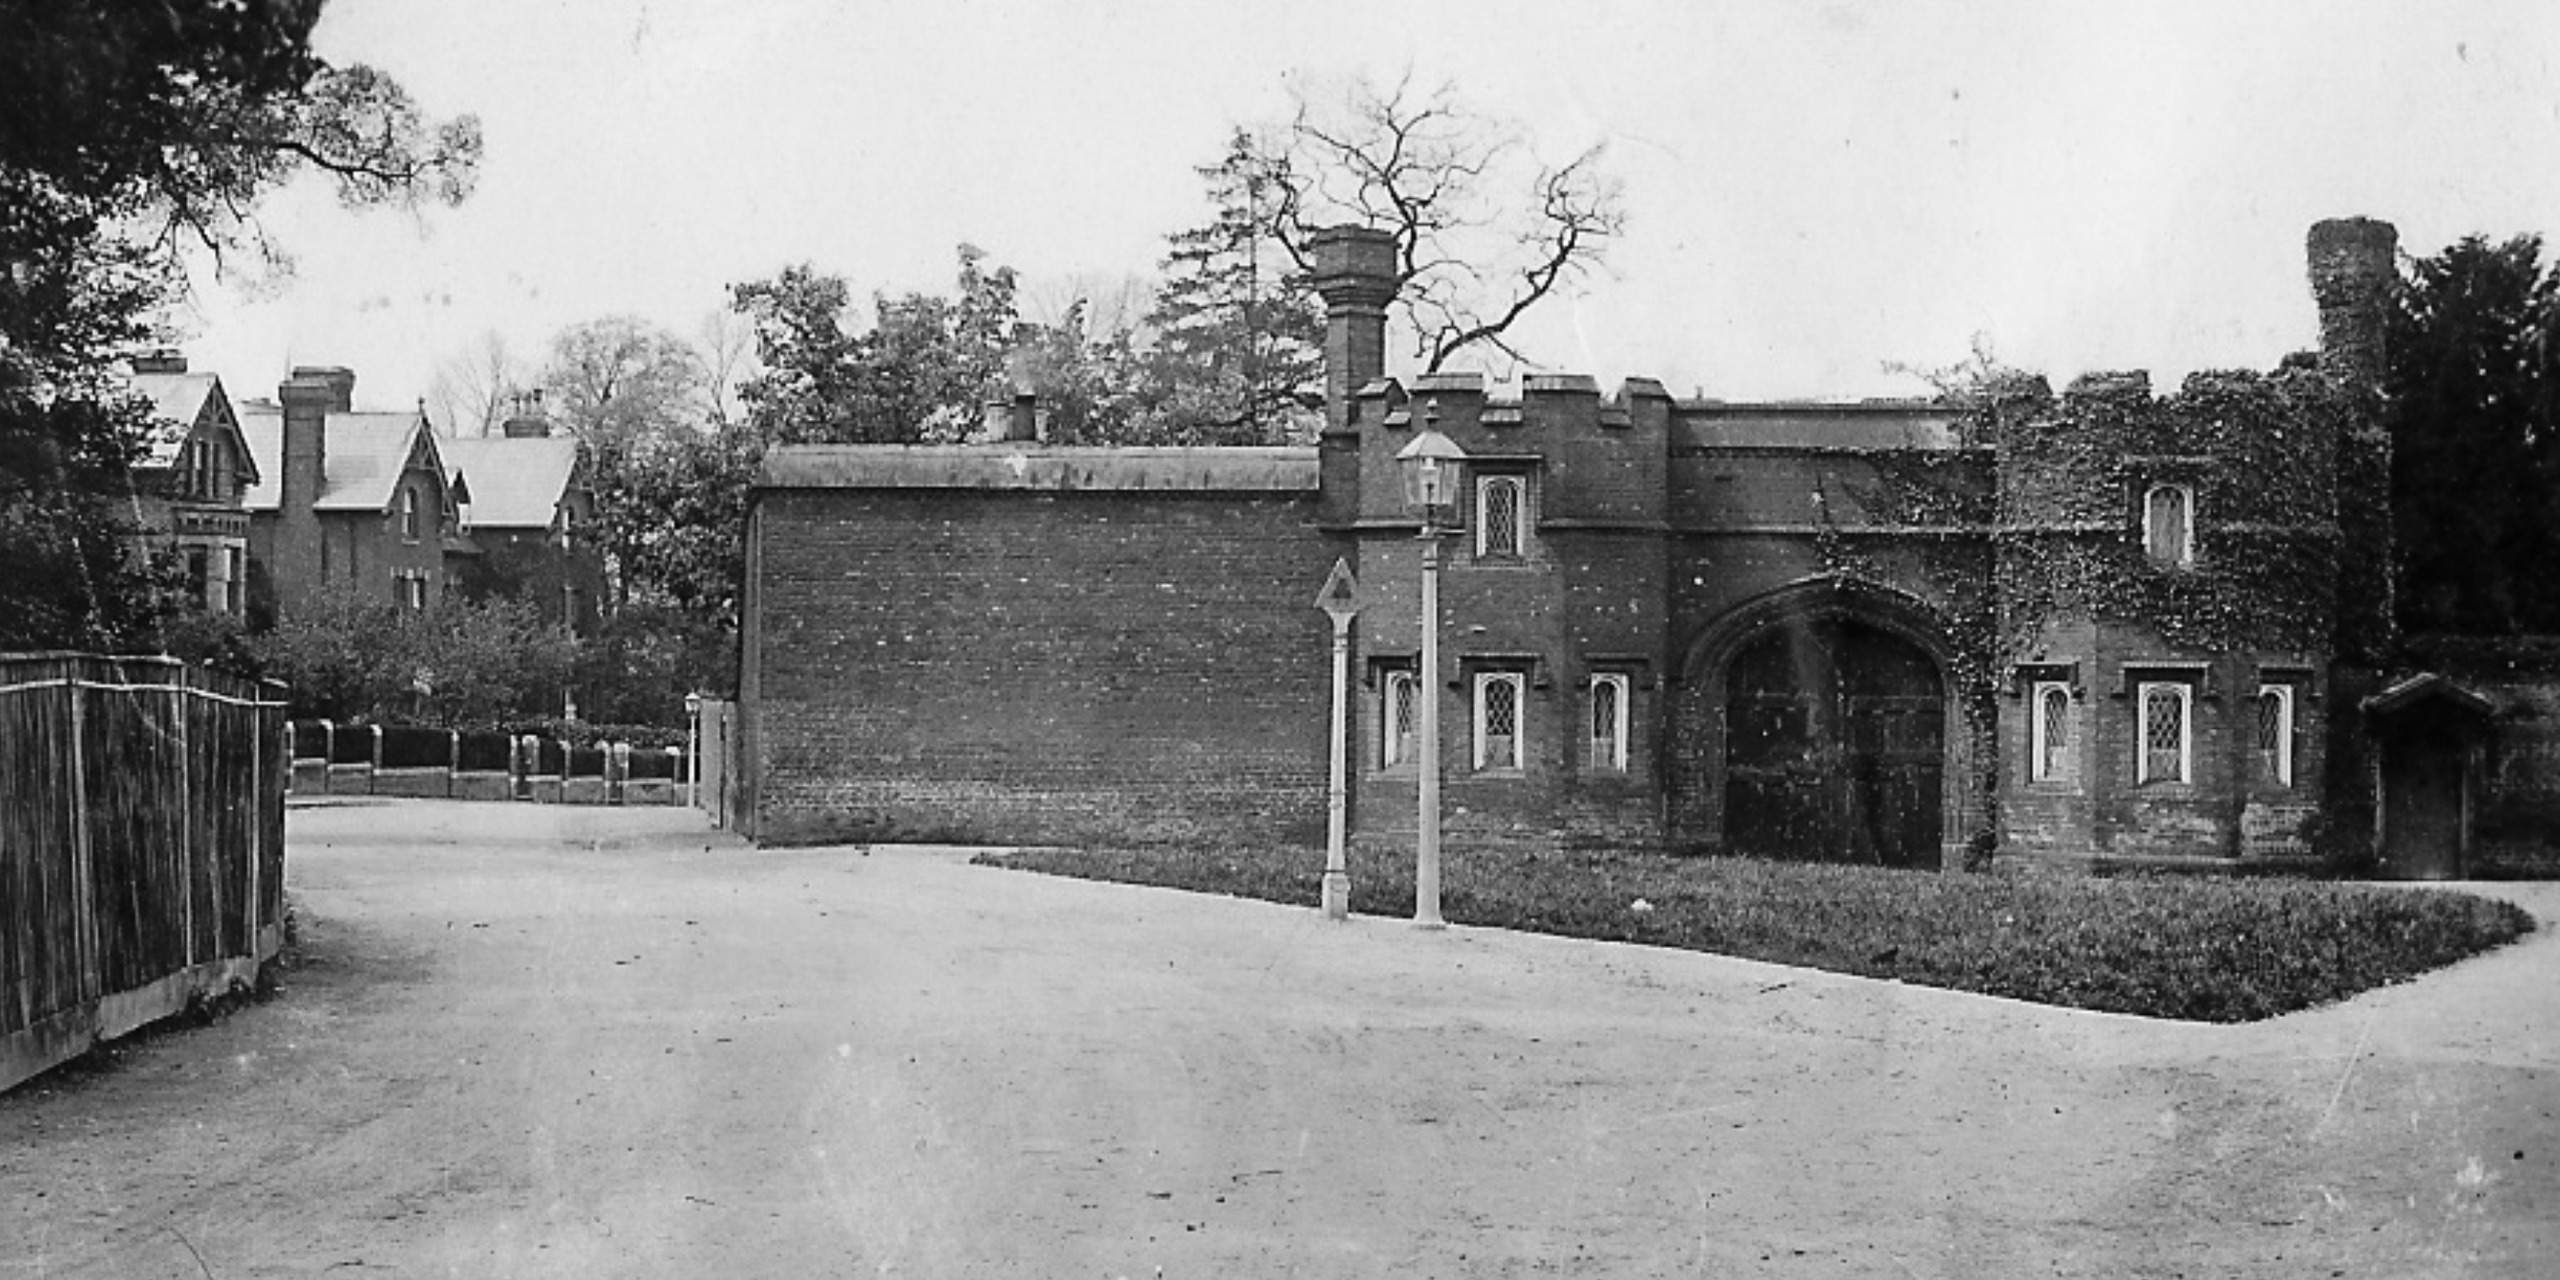 Now & Then - The Gatehouse, Church Road, West Drayton - 2019 vs c.1900